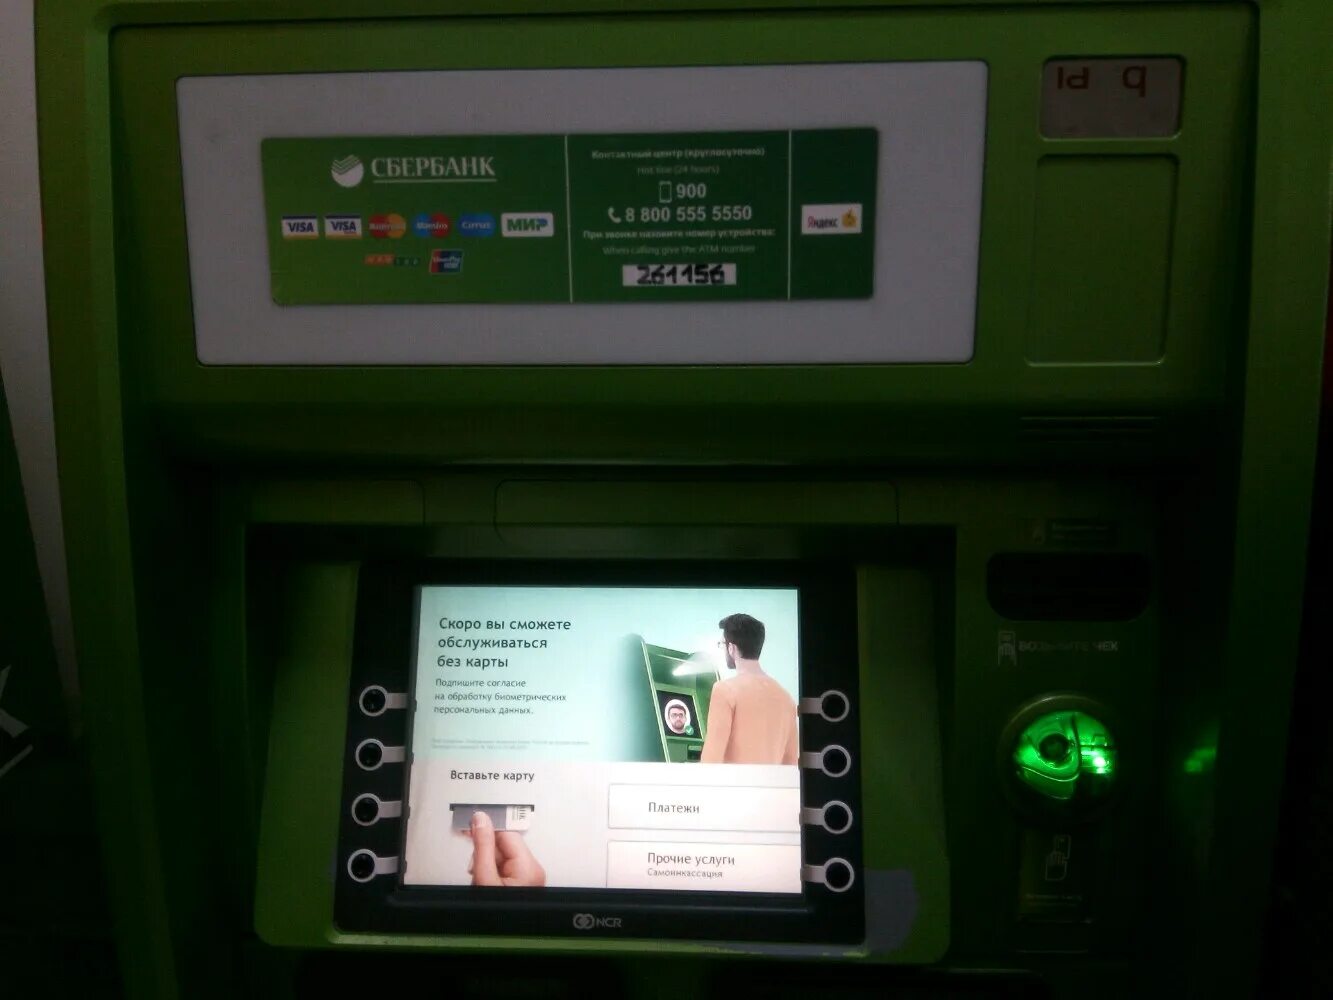 Сбербанк банкоматы набережные. Экран банкомата. Банкомат Сбербанка. Экран банкомата Сбербанка. Сбербанк раздел банкоматы.